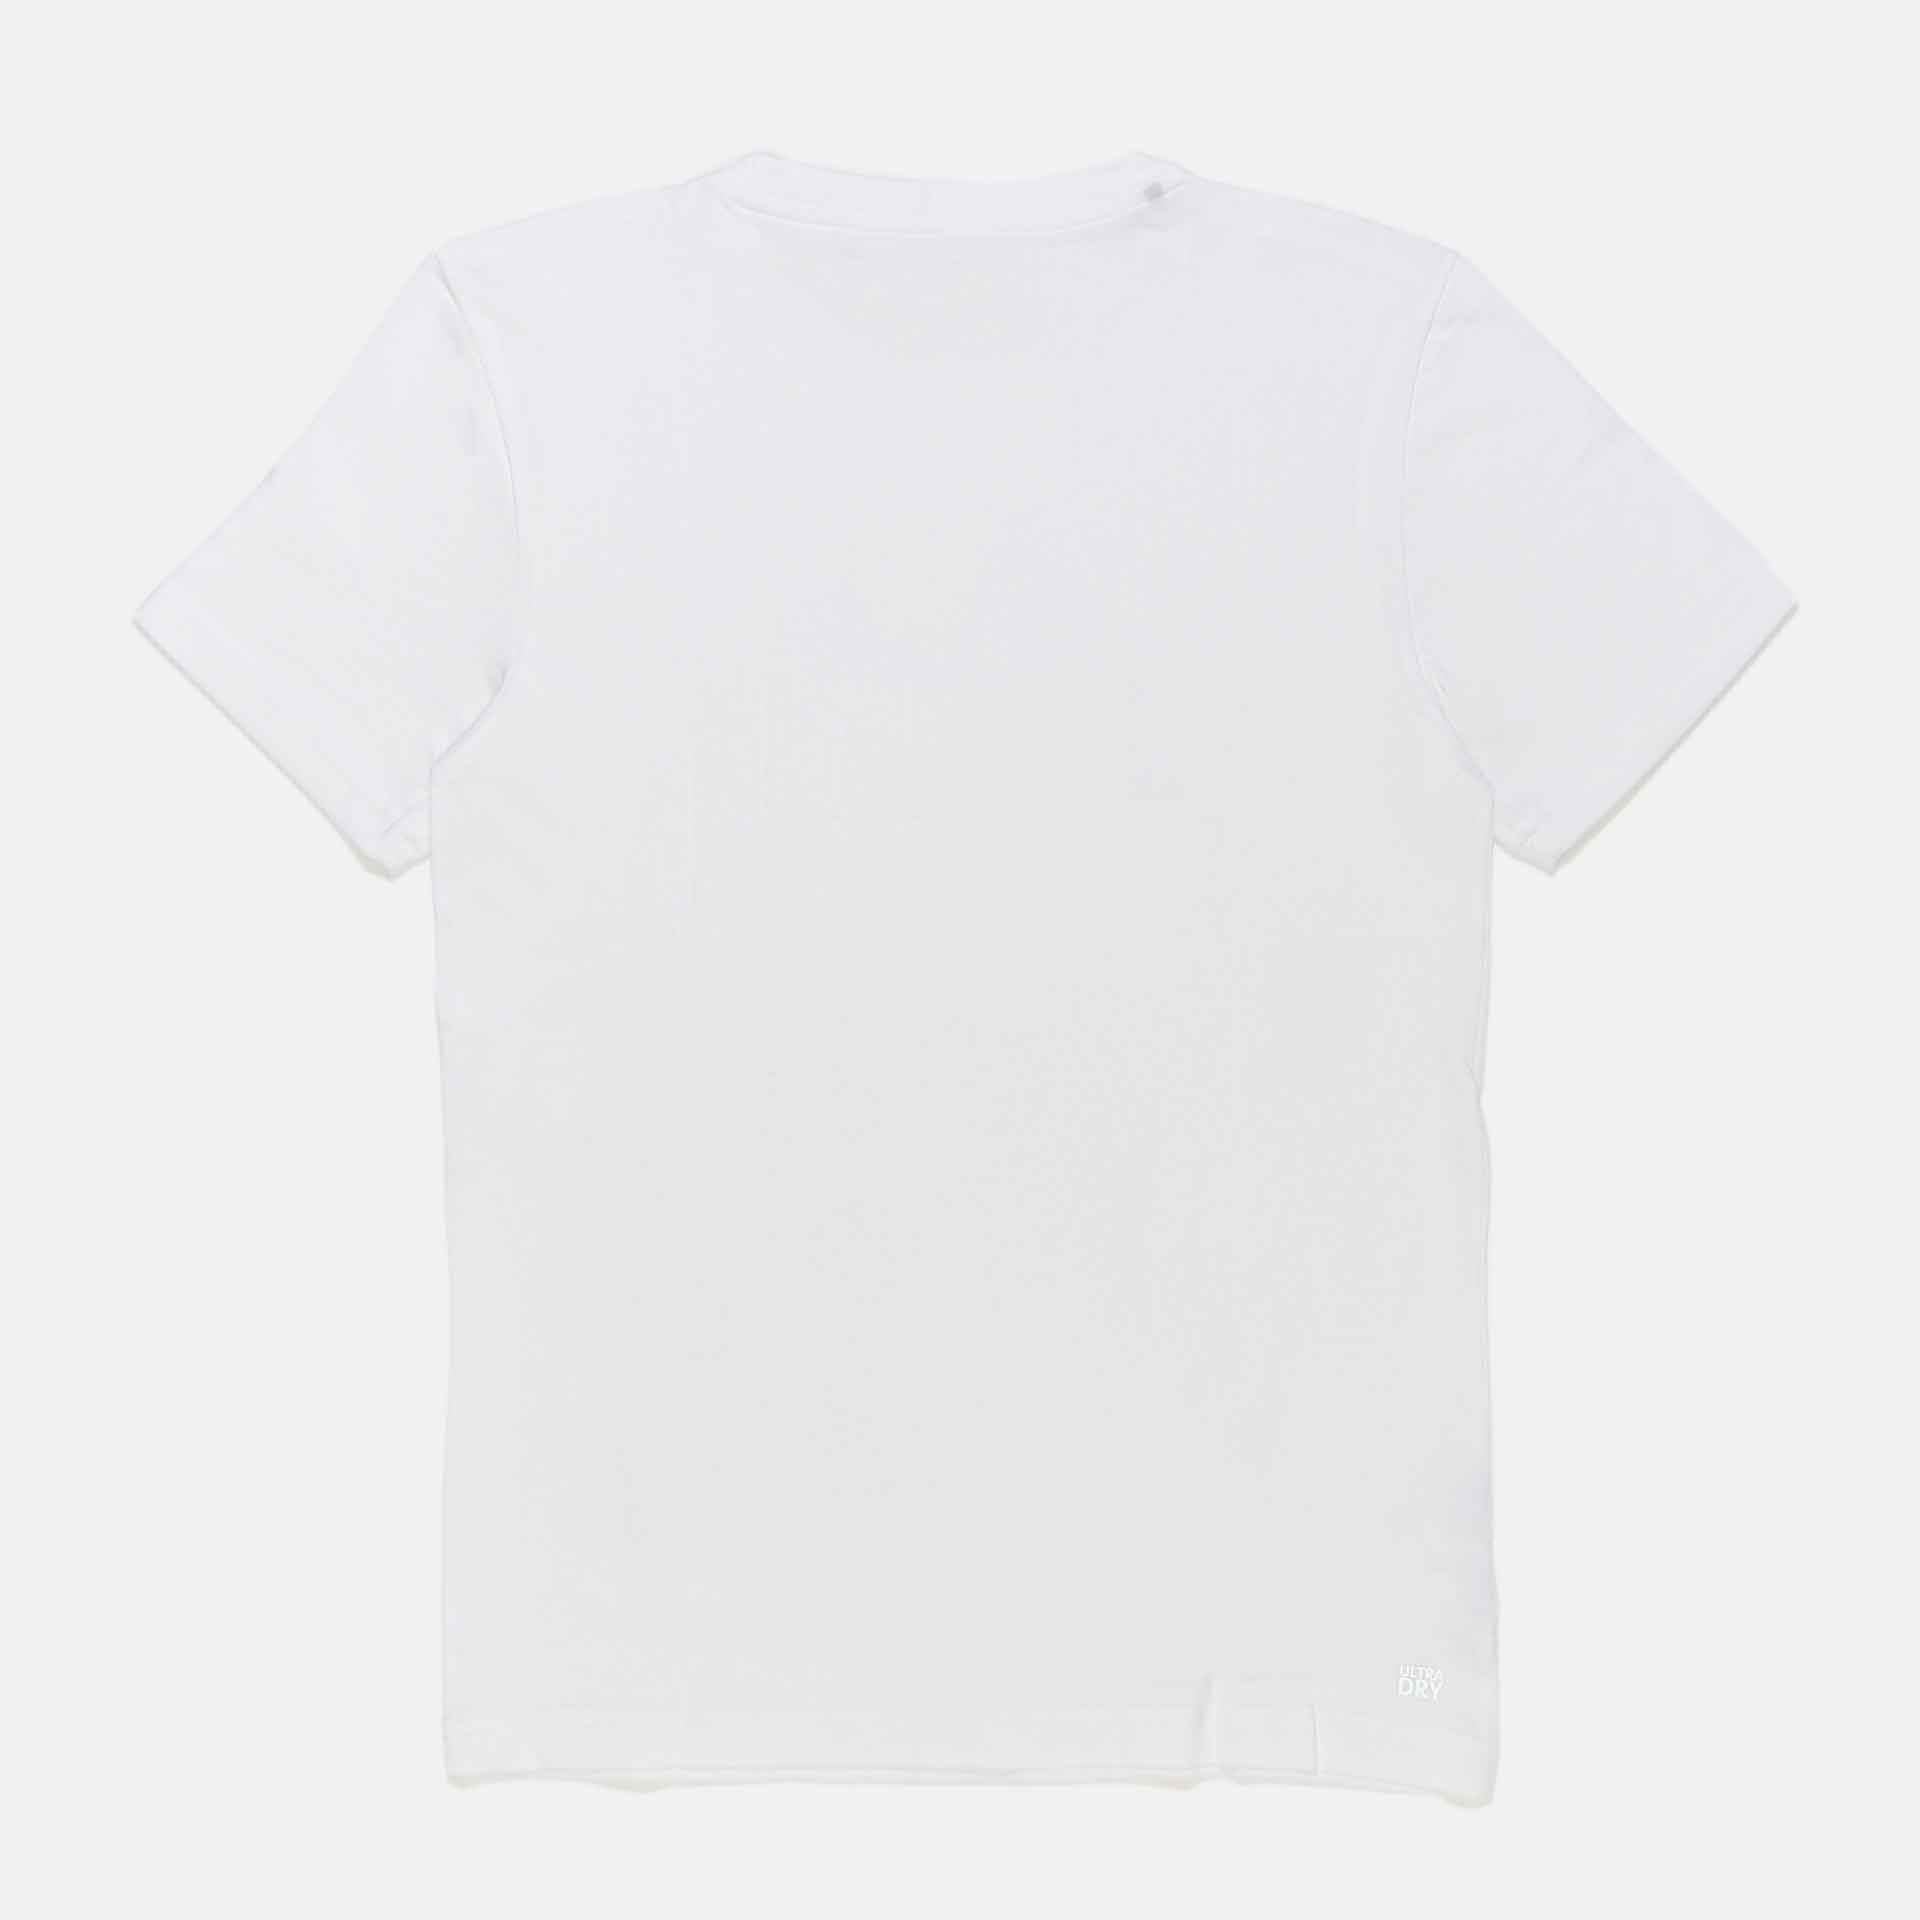 Lacoste 3D Croco T-Shirt White/Kingdom